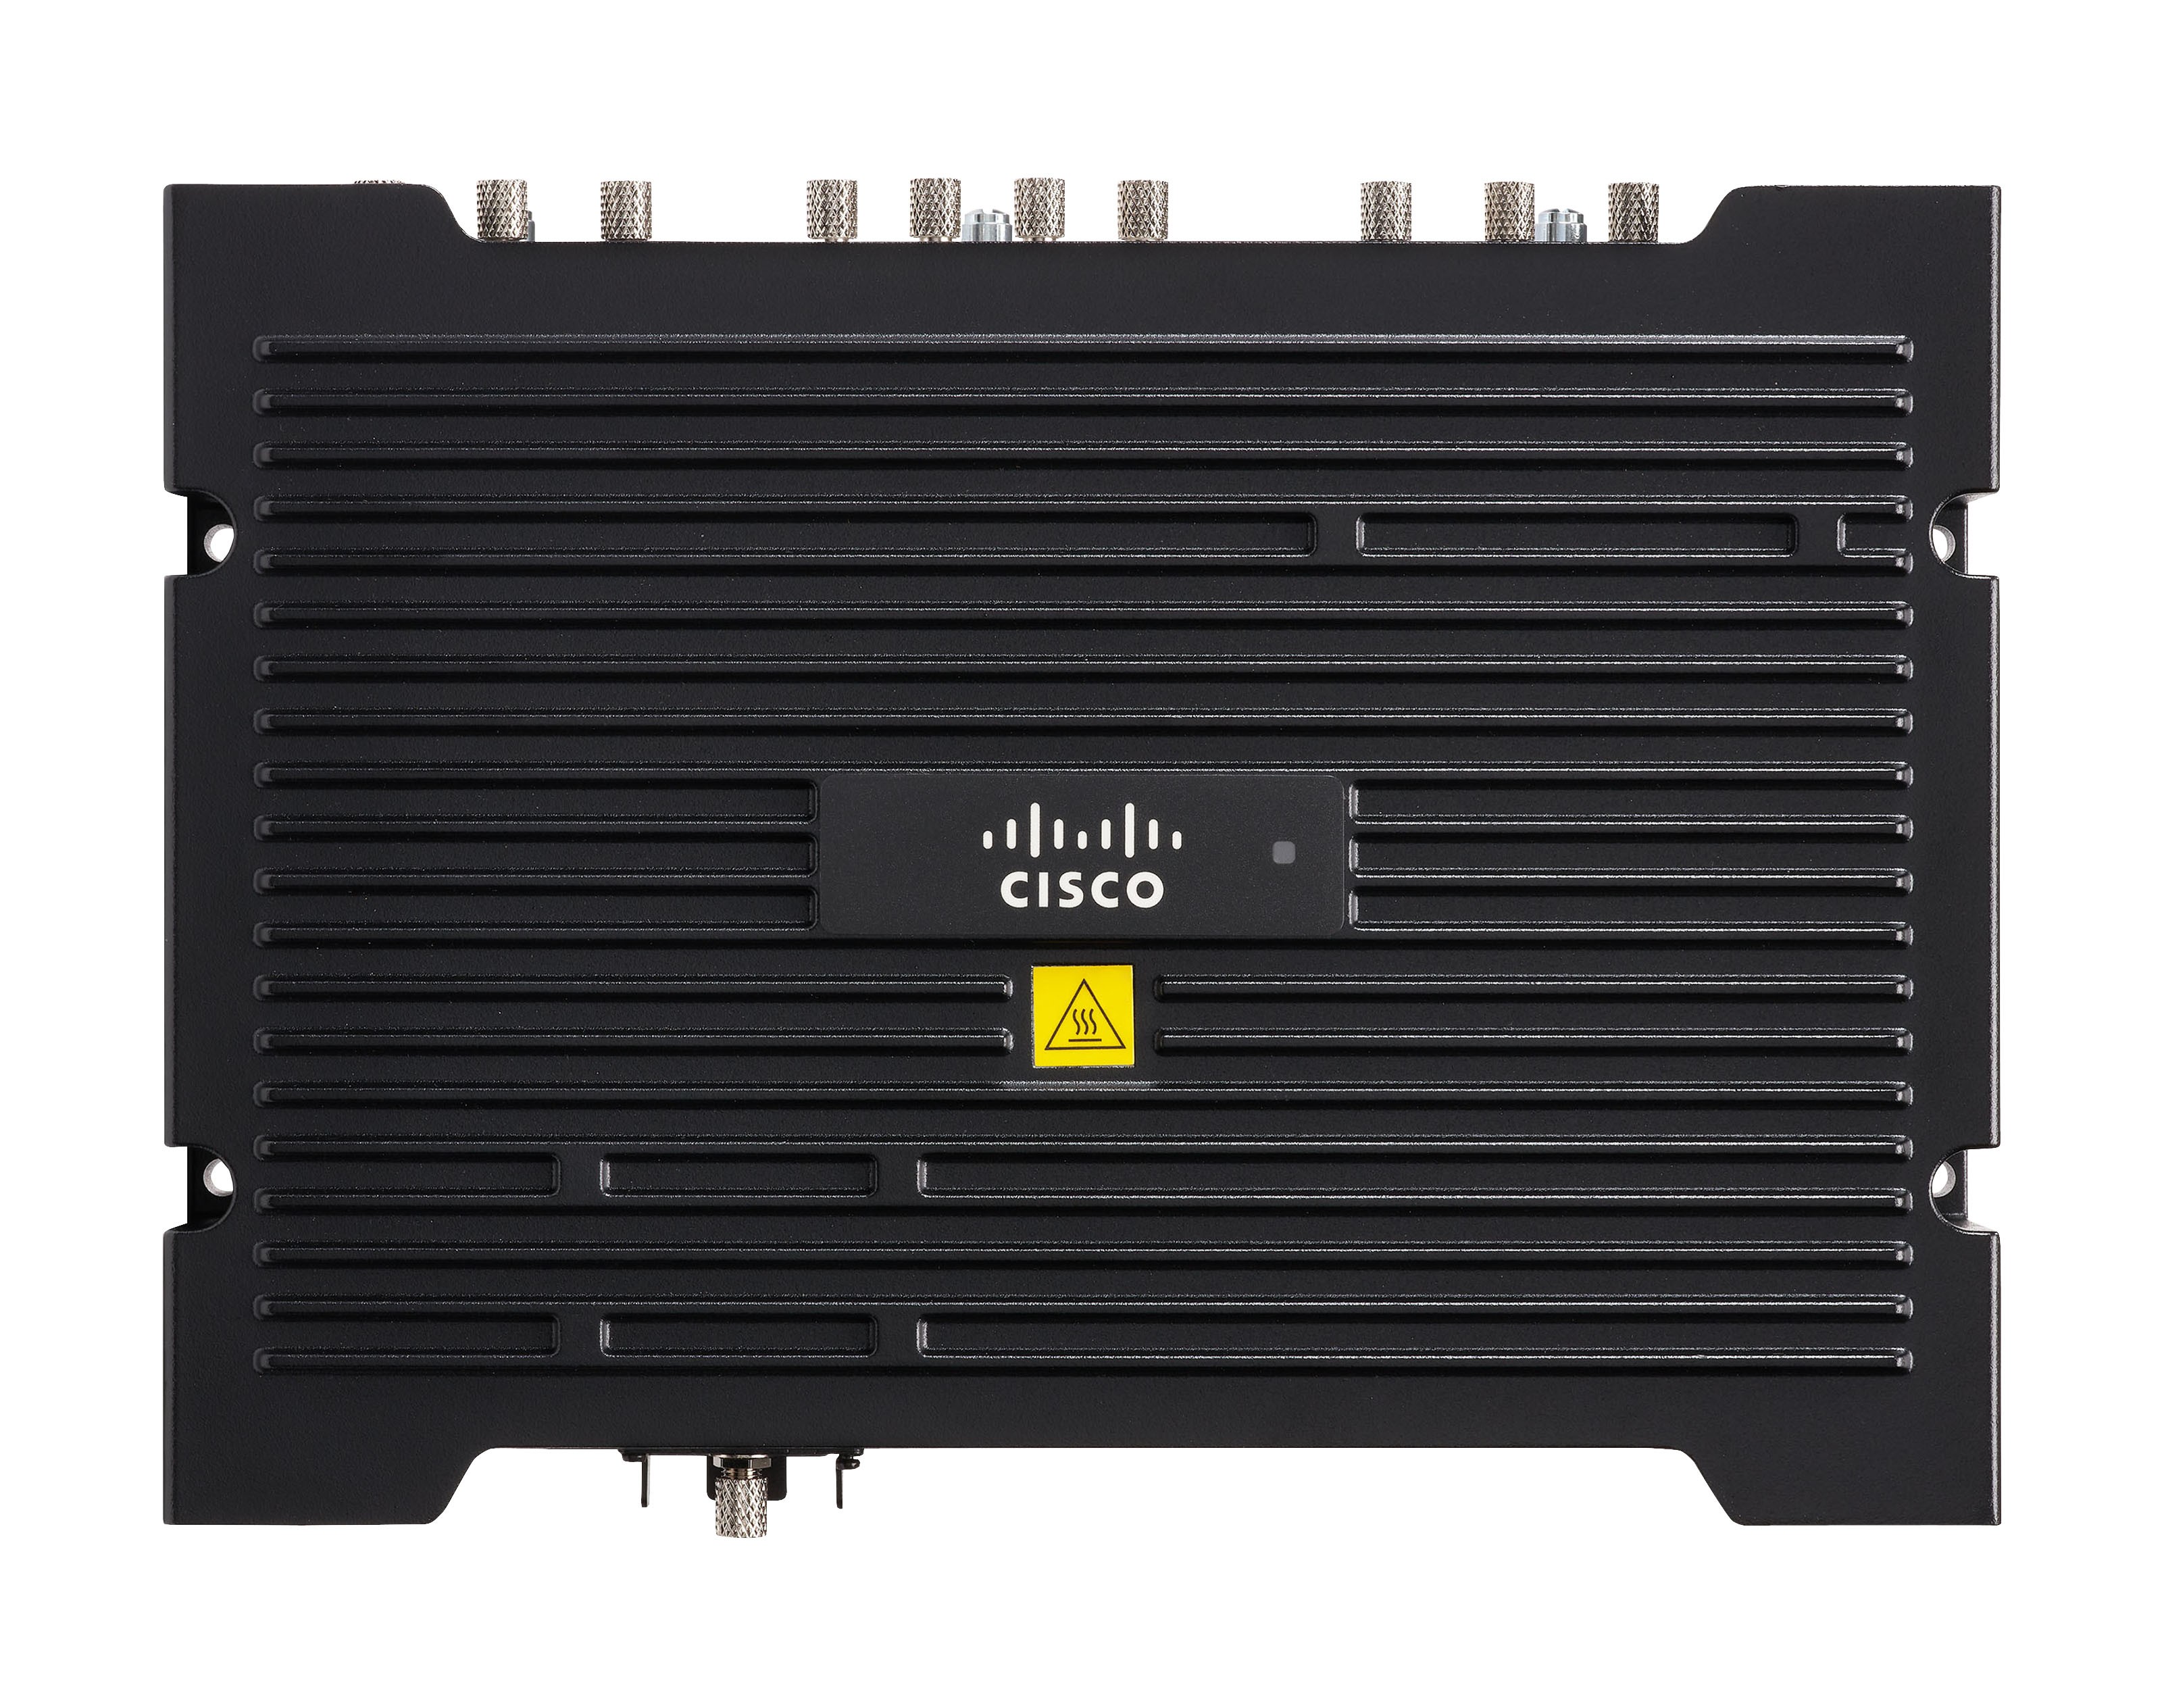 Cisco-IR1800-Rugged-top.jpg